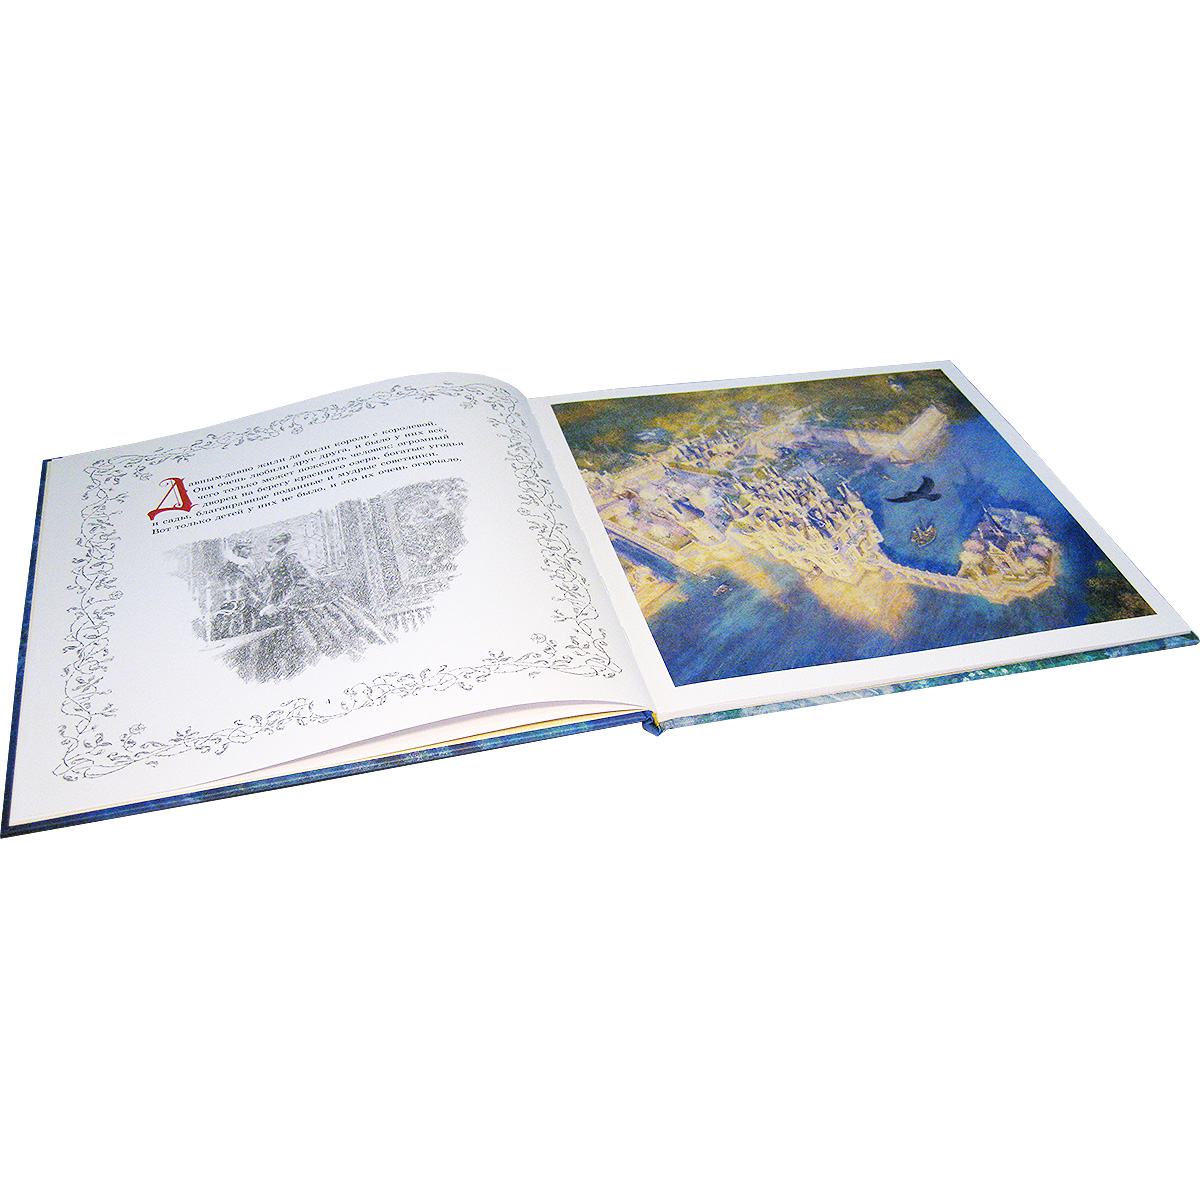 Спящая красавица книга иллюстрации Кристиана Бирмингема